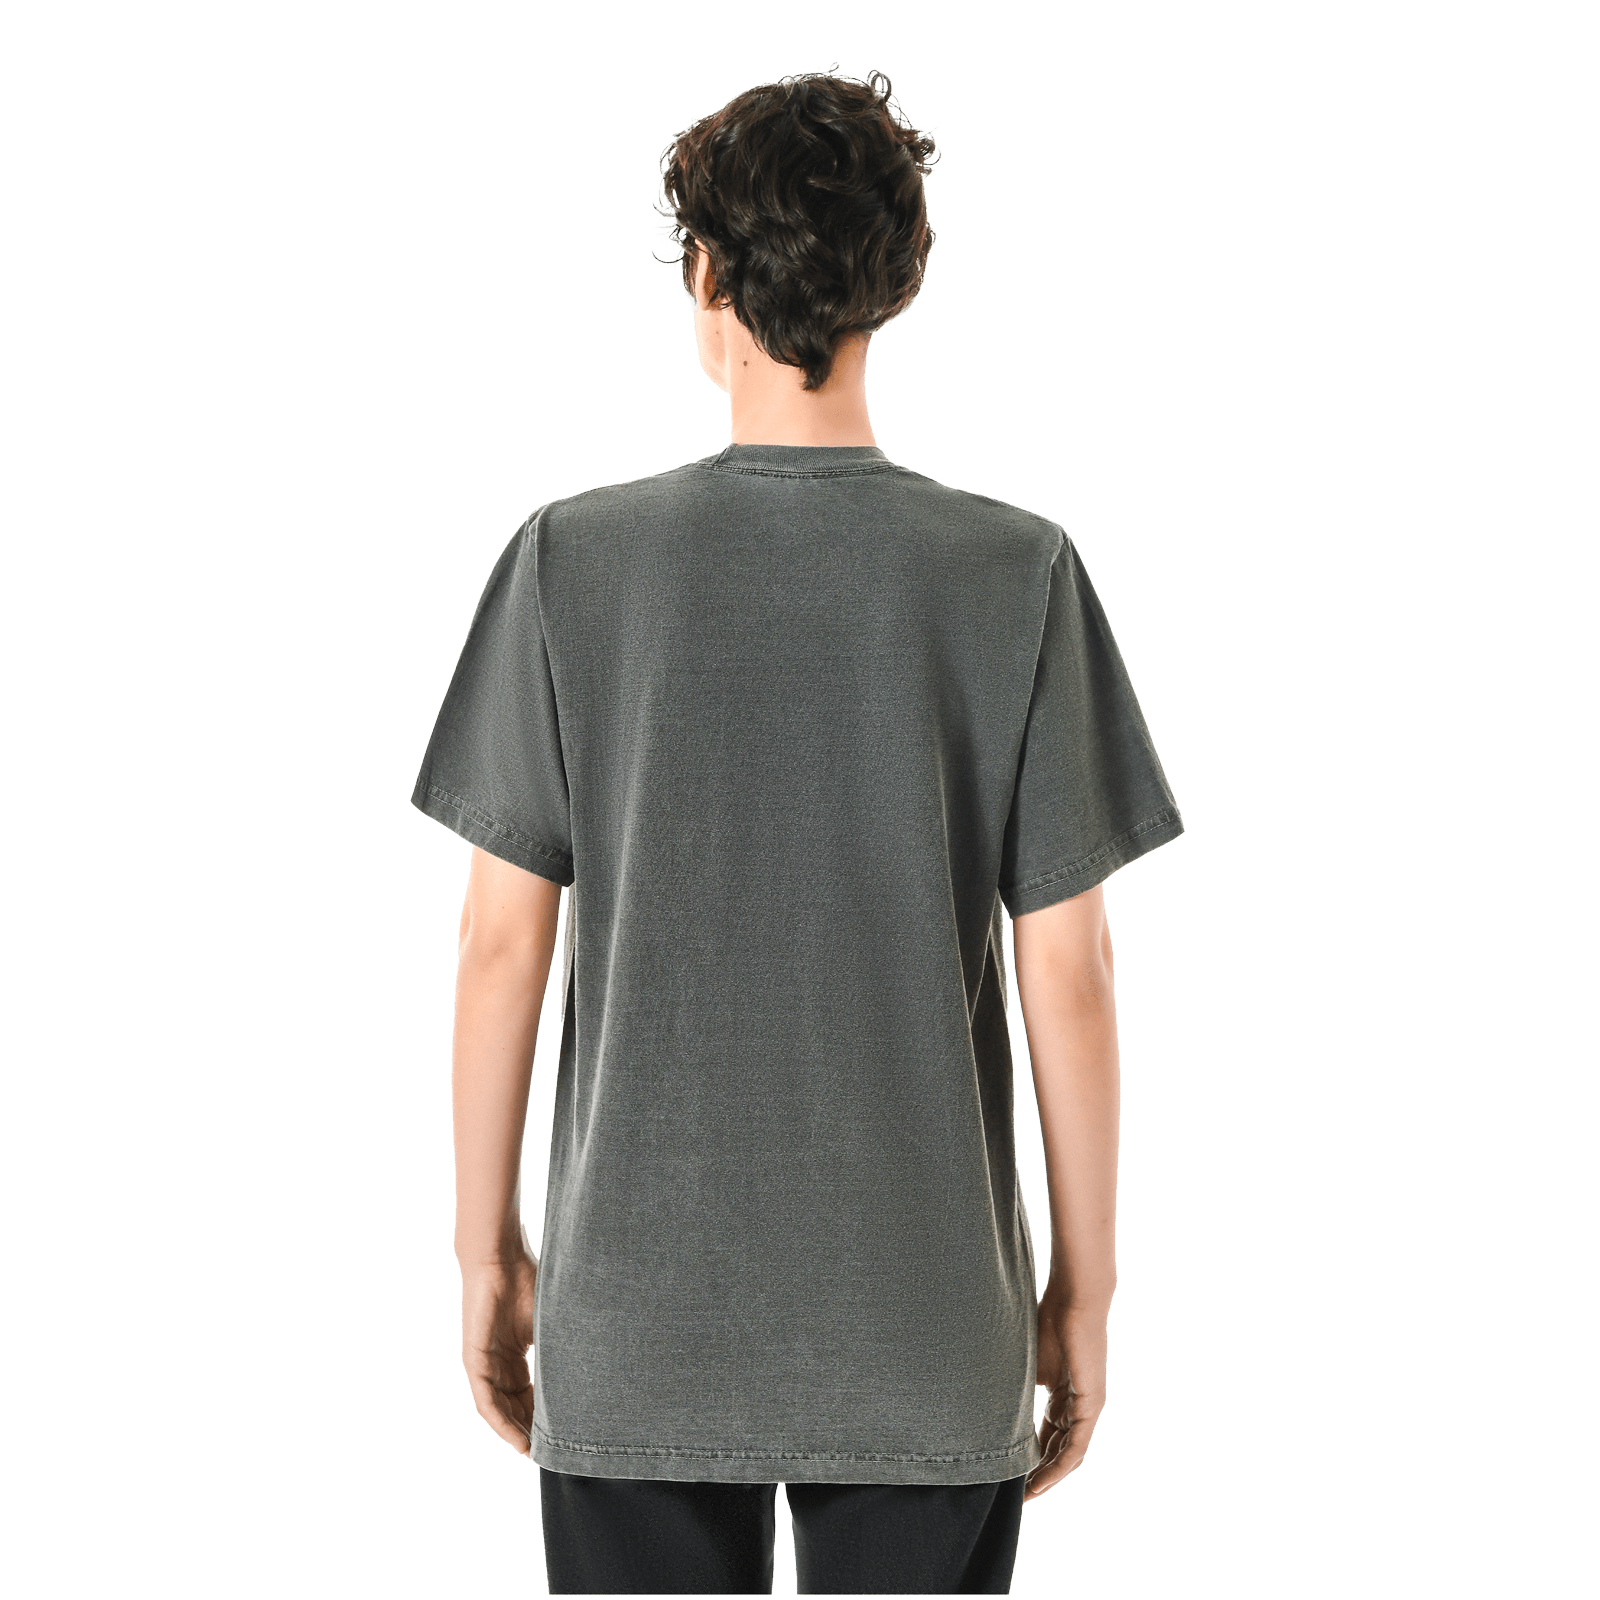 Garment Dye T-Shirt - Standard Size - Shadow